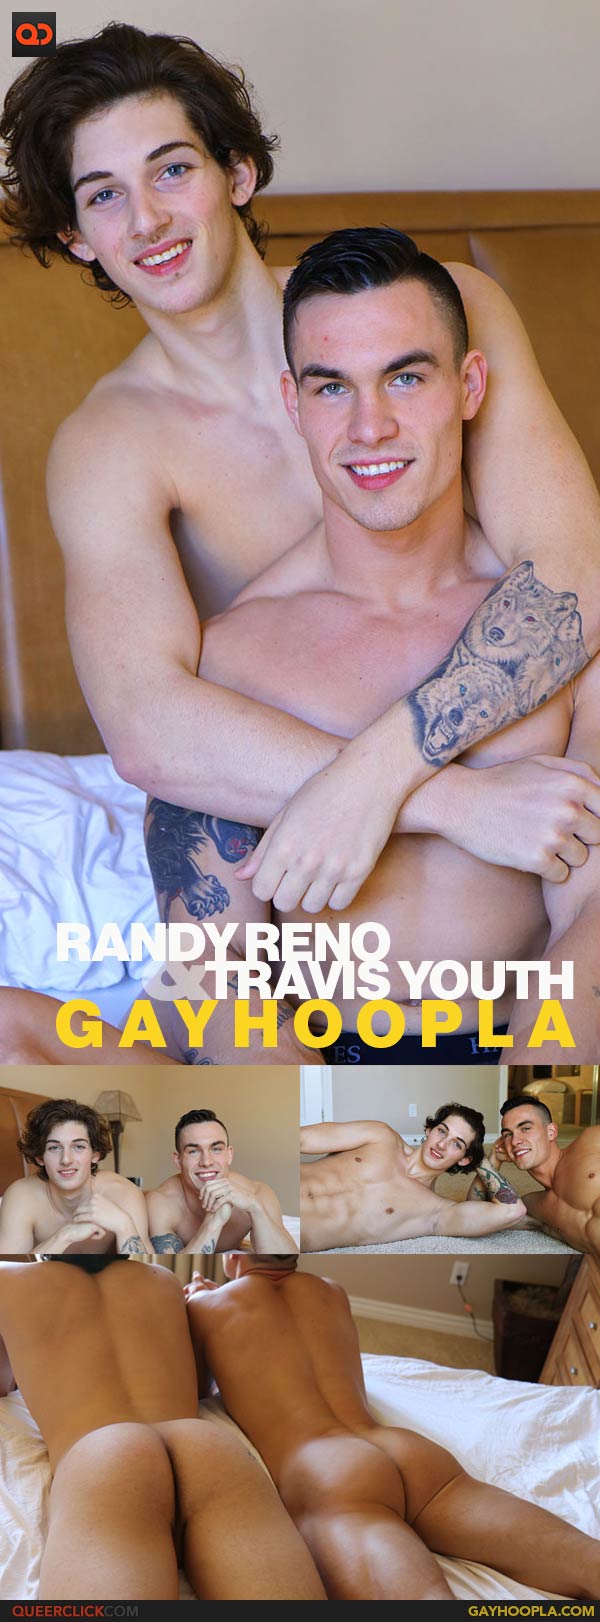 GayHoopla: Randy Reno and Travis Youth